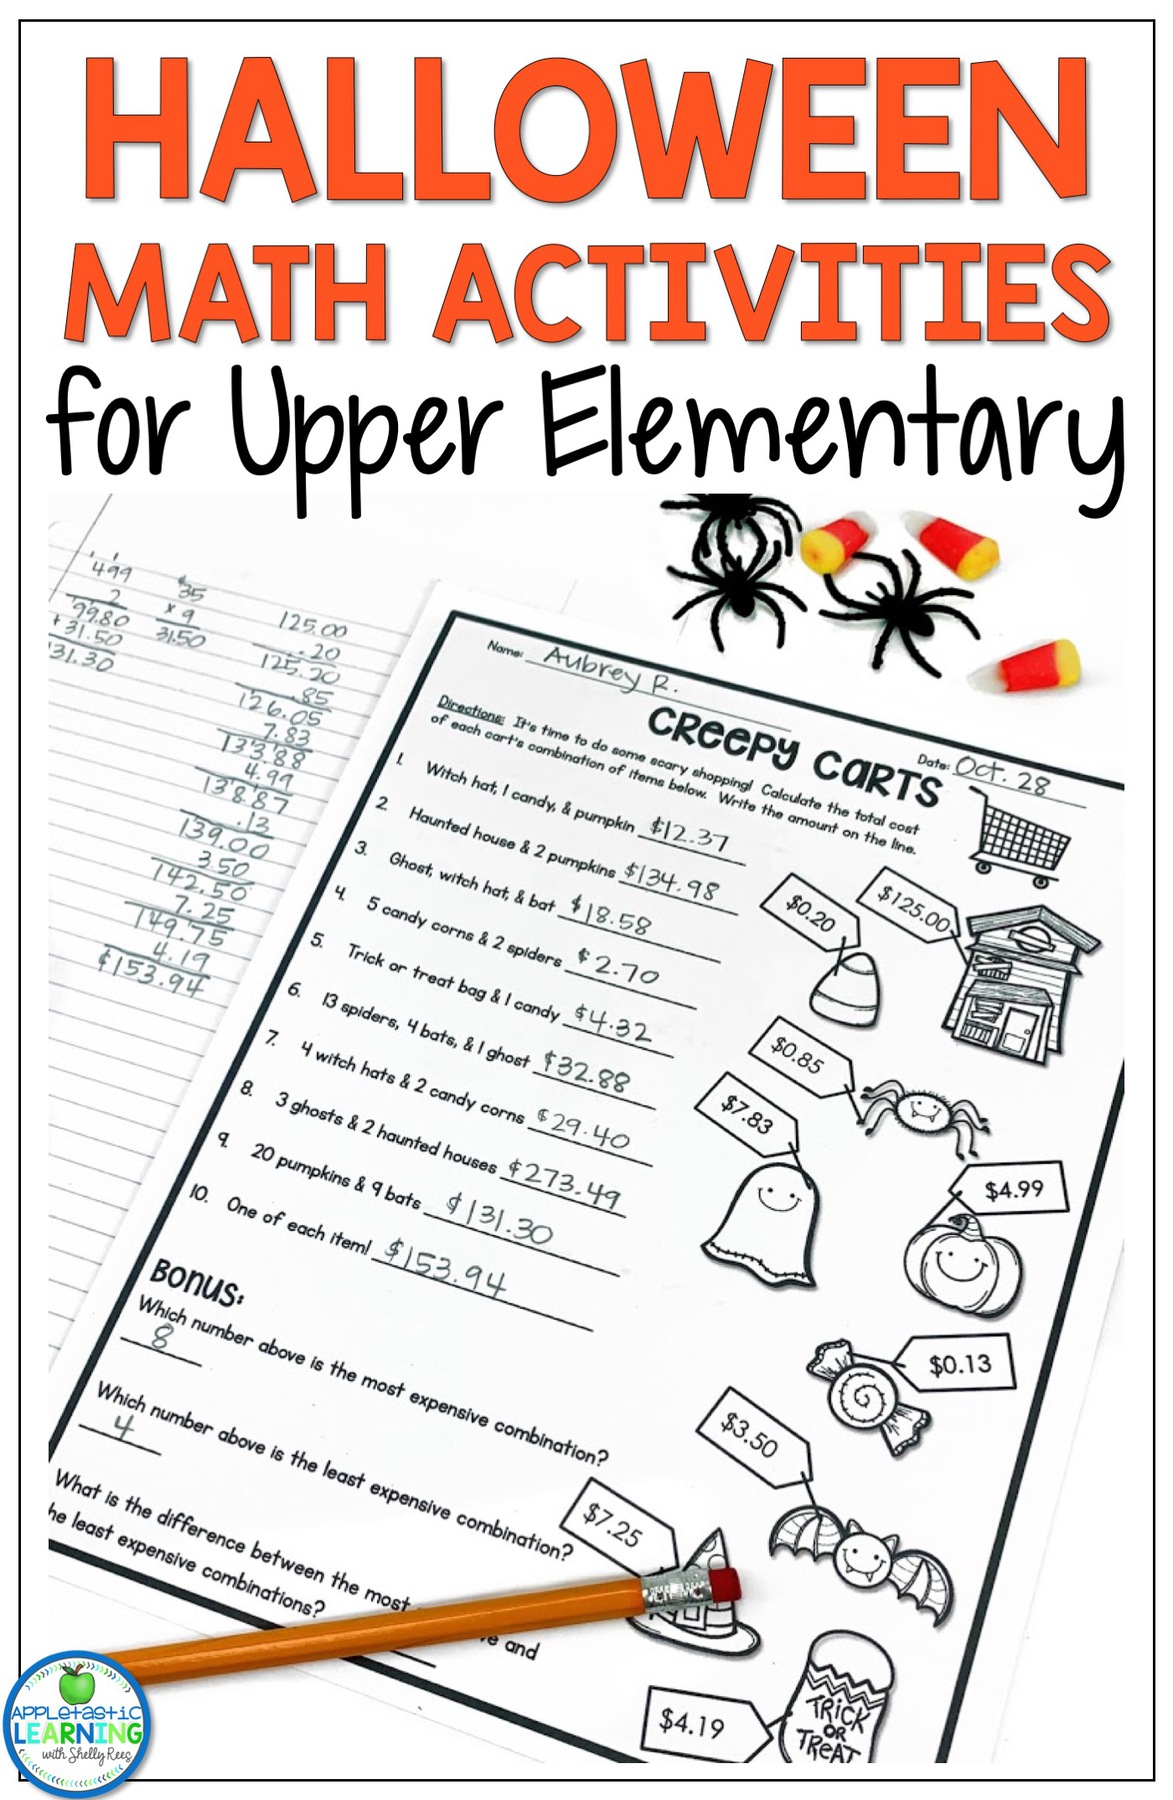 Halloween math activities for the upper elementary classroom